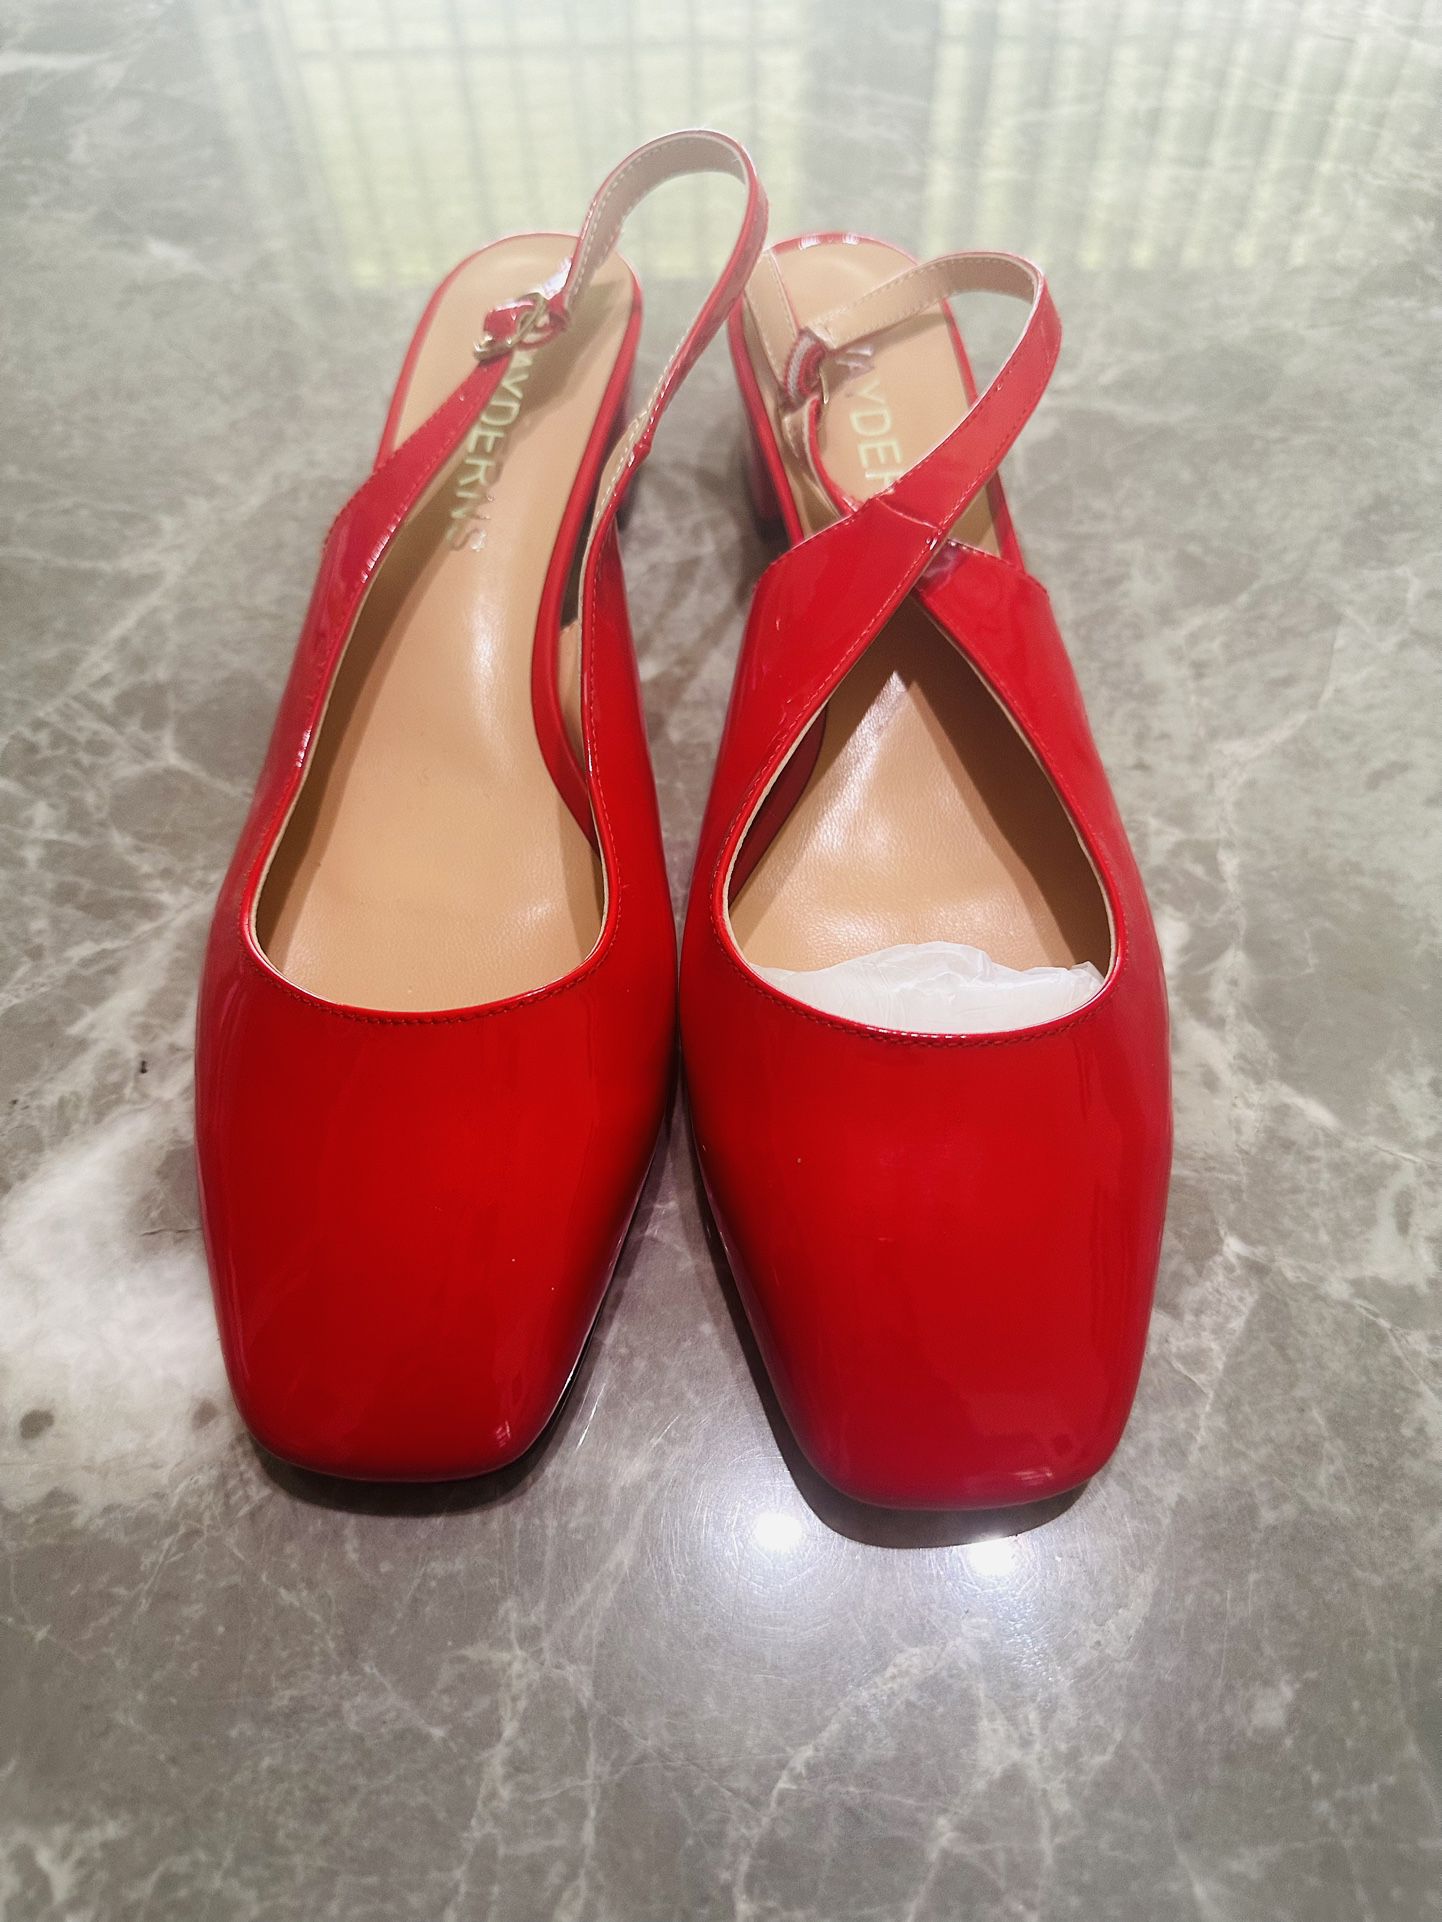 WAYDERNS Spicy Red Patent Leather Sligback Block Heels SZ 10